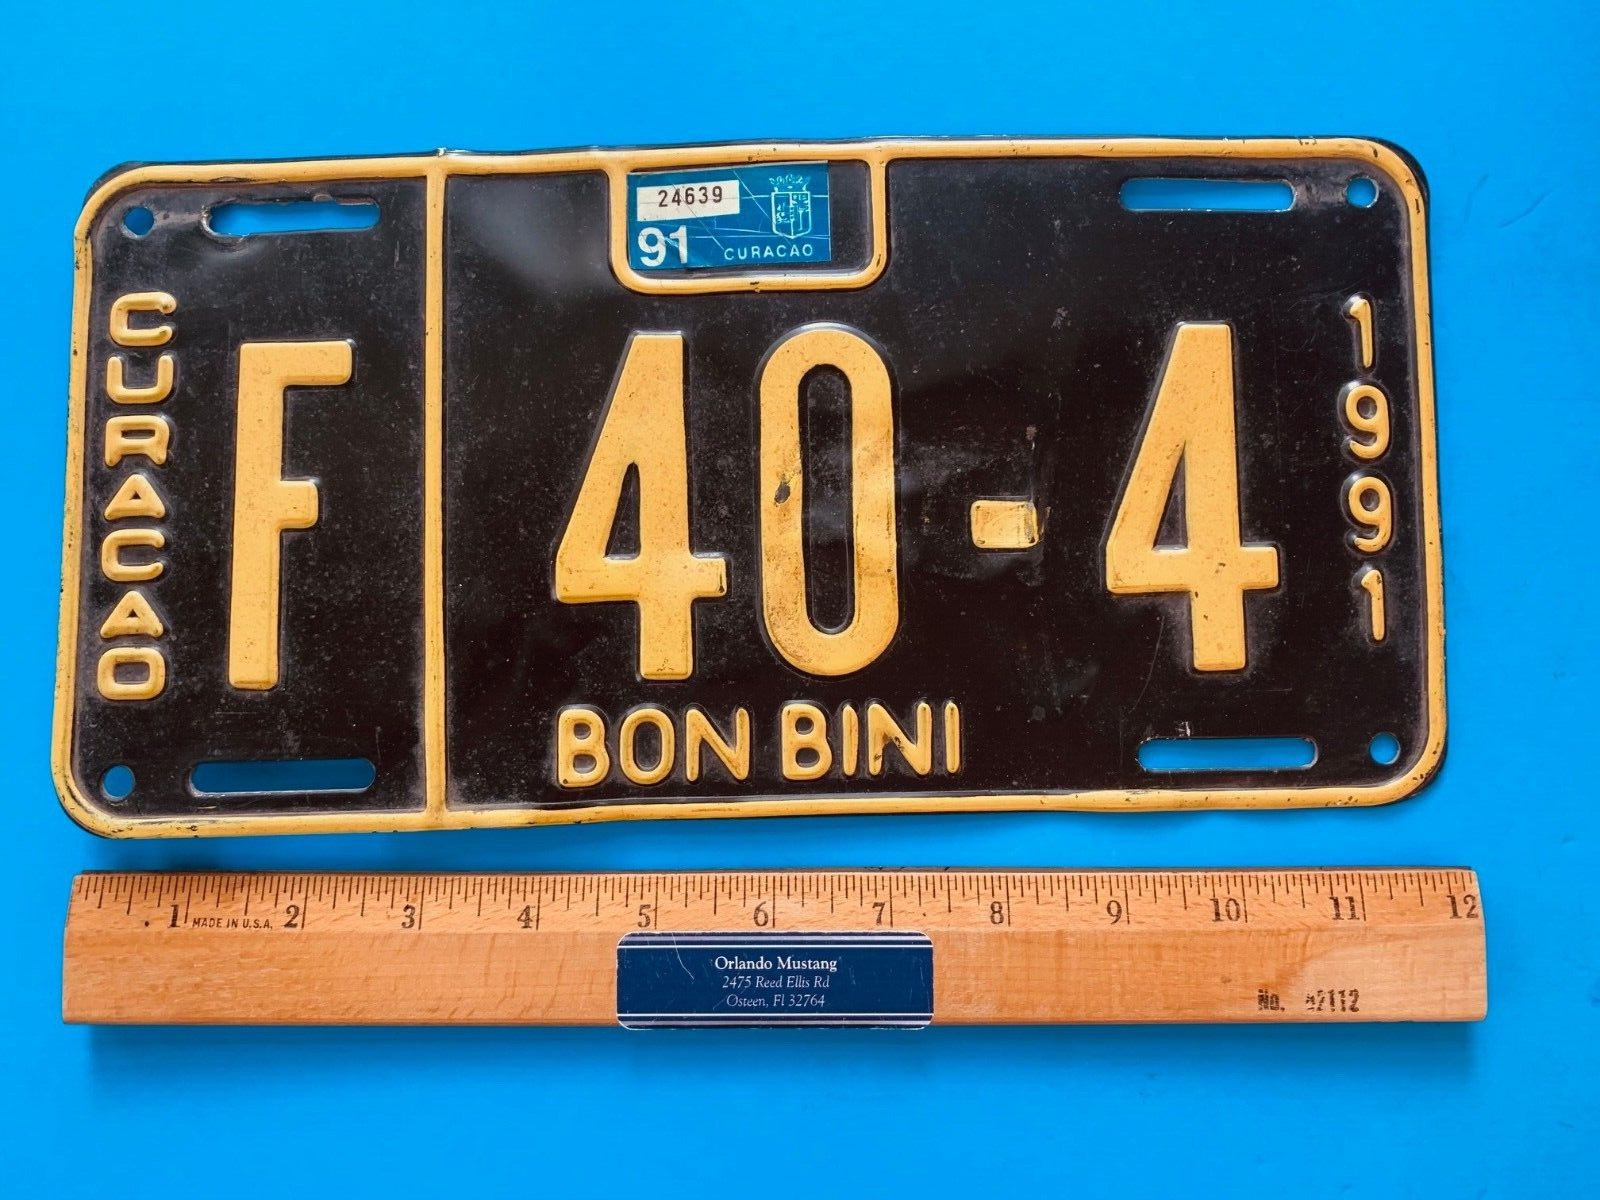 1991 Curacao Bon Bini License Plate Car Tag F 40 - 4 Islands #54